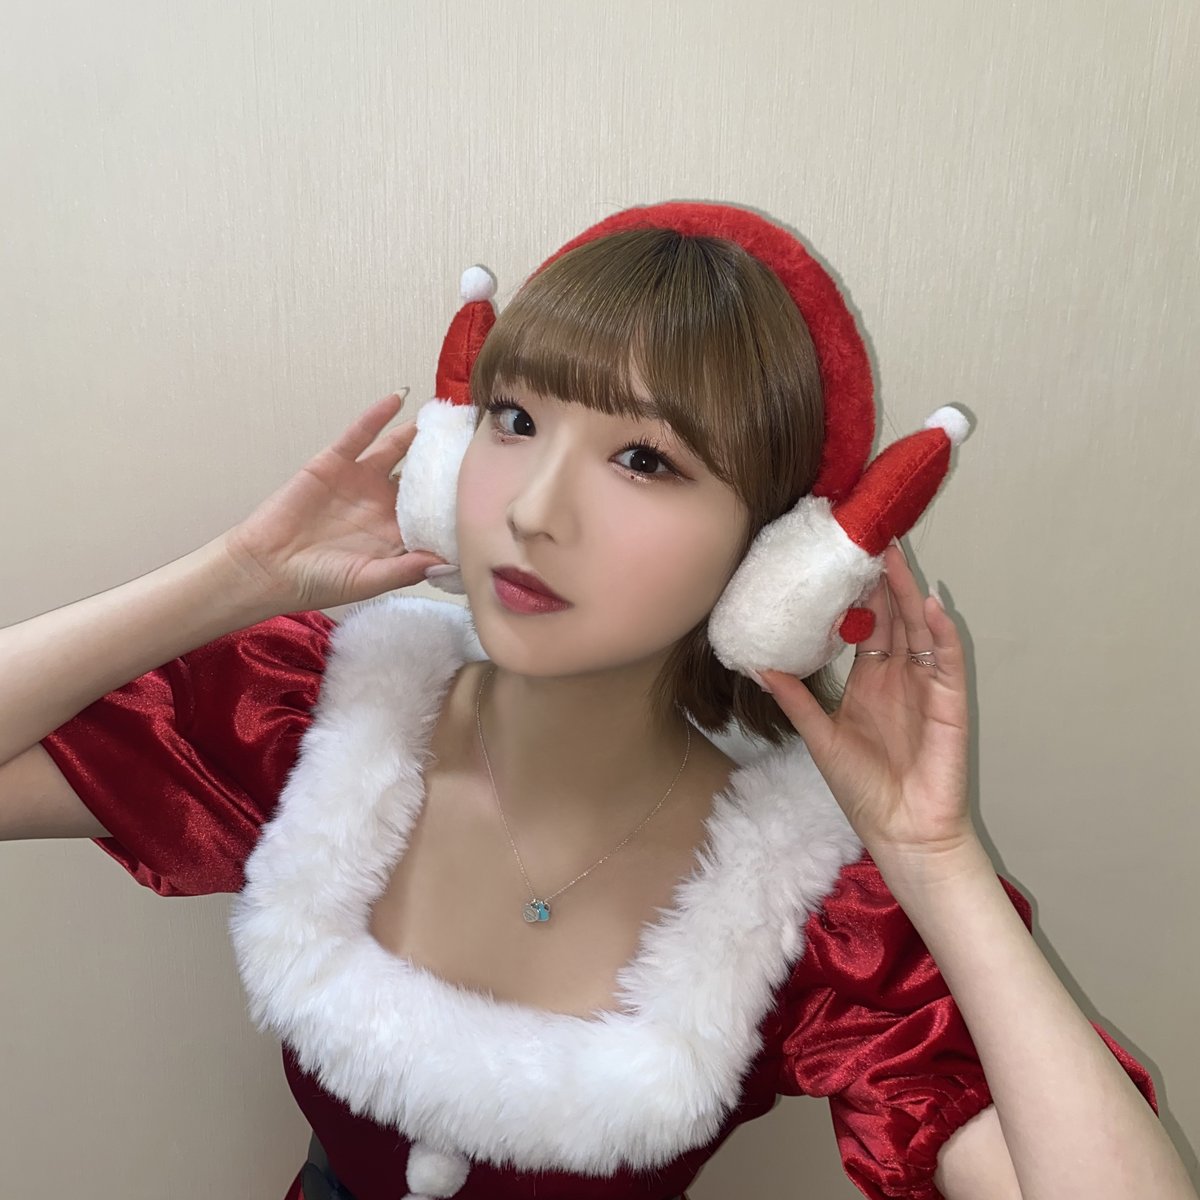 Merry Christmas with YeoJin🐸🎄 산타 오는 소리가 들리는 것 같아요! #이달의소녀 #여진 #LOONA #YeoJin